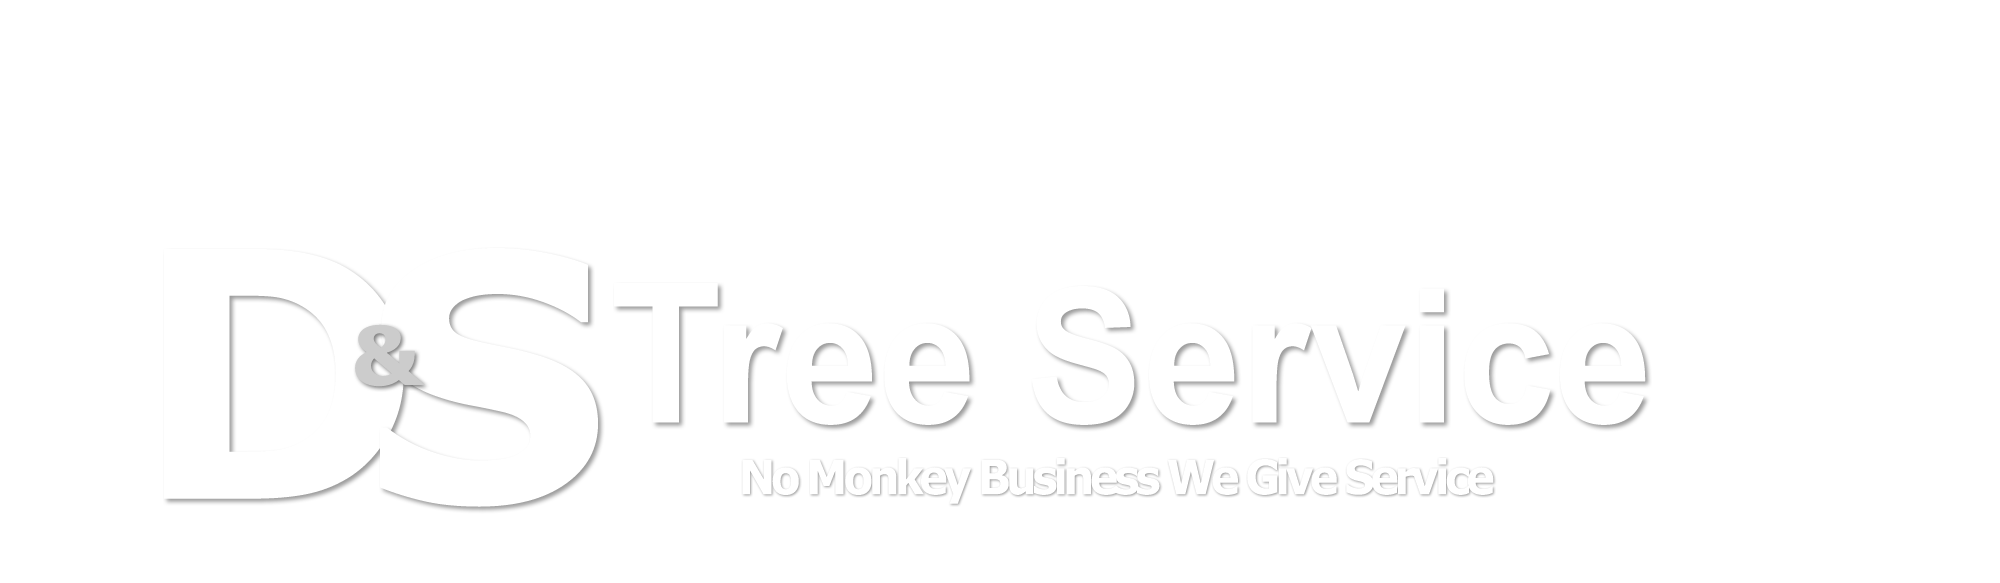 DS Tree Service Logo